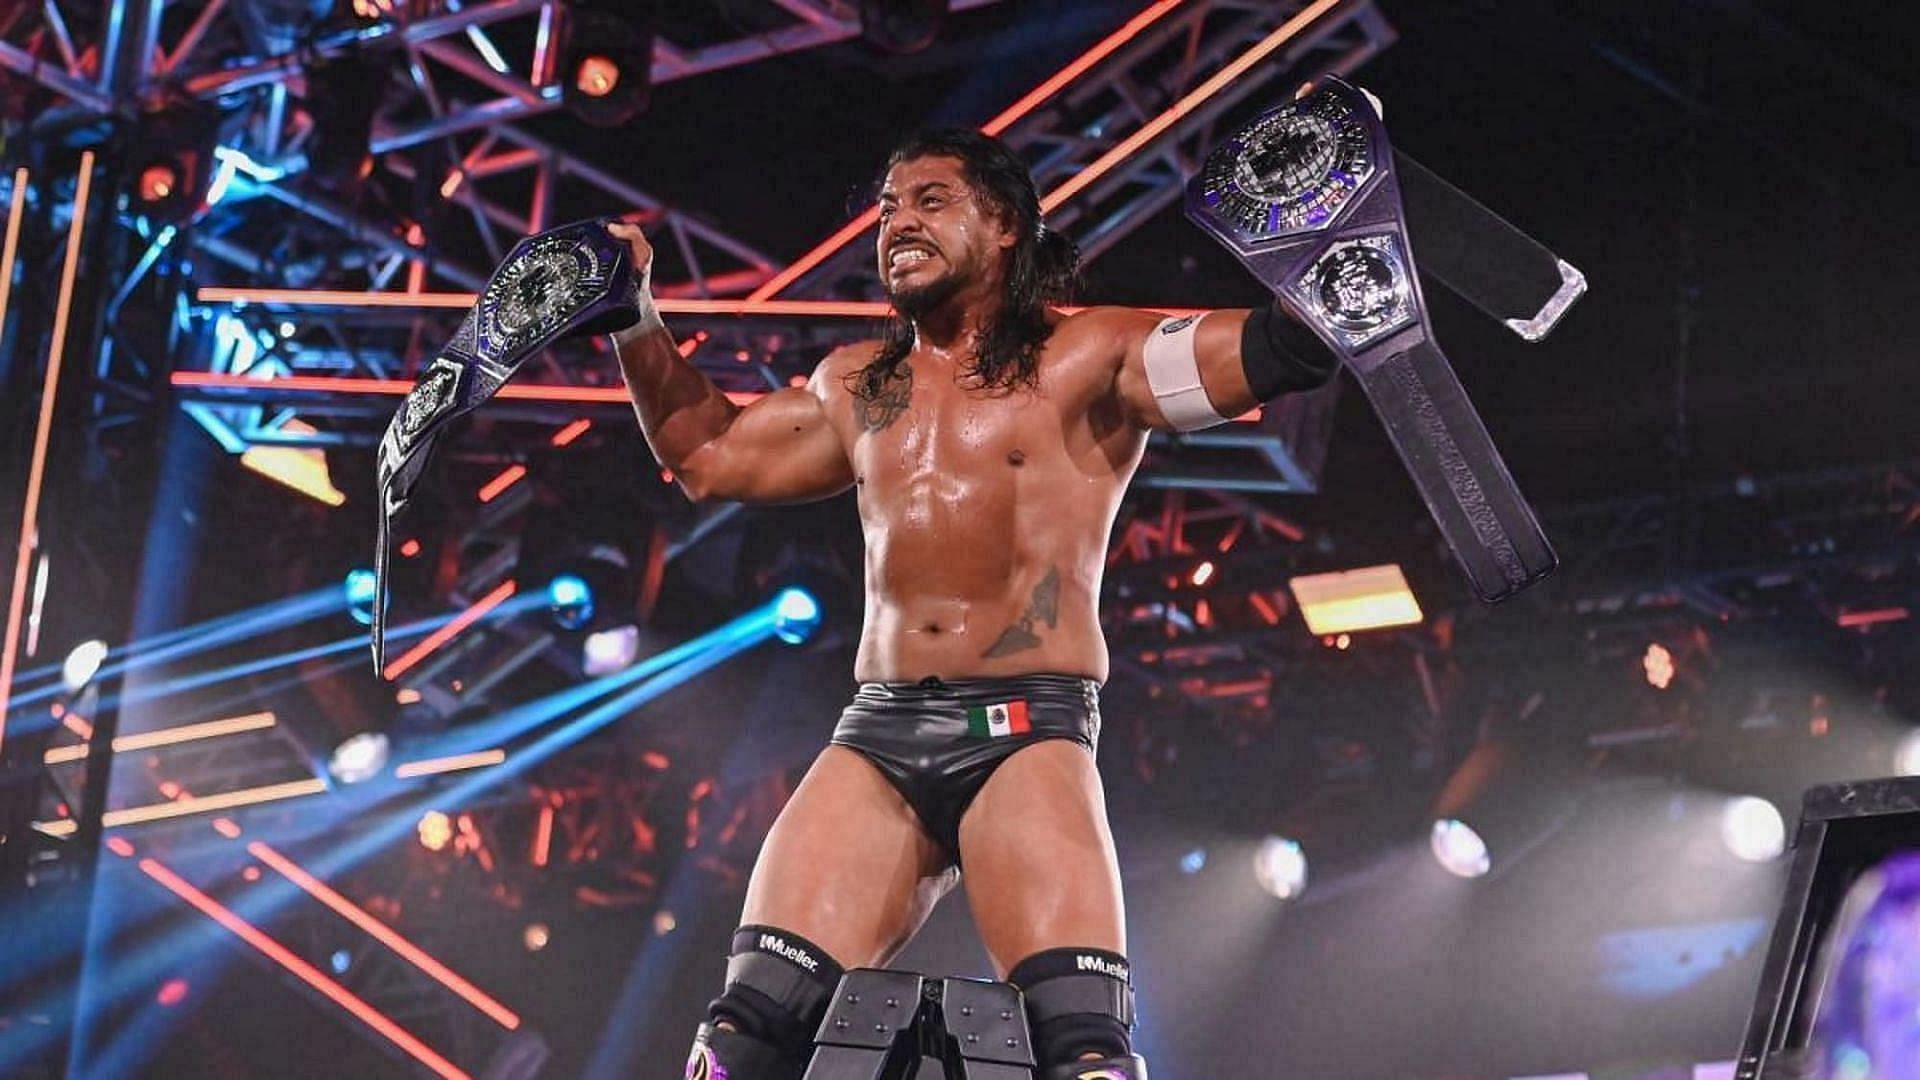 WWE: Santos Escobar is a main event level talent